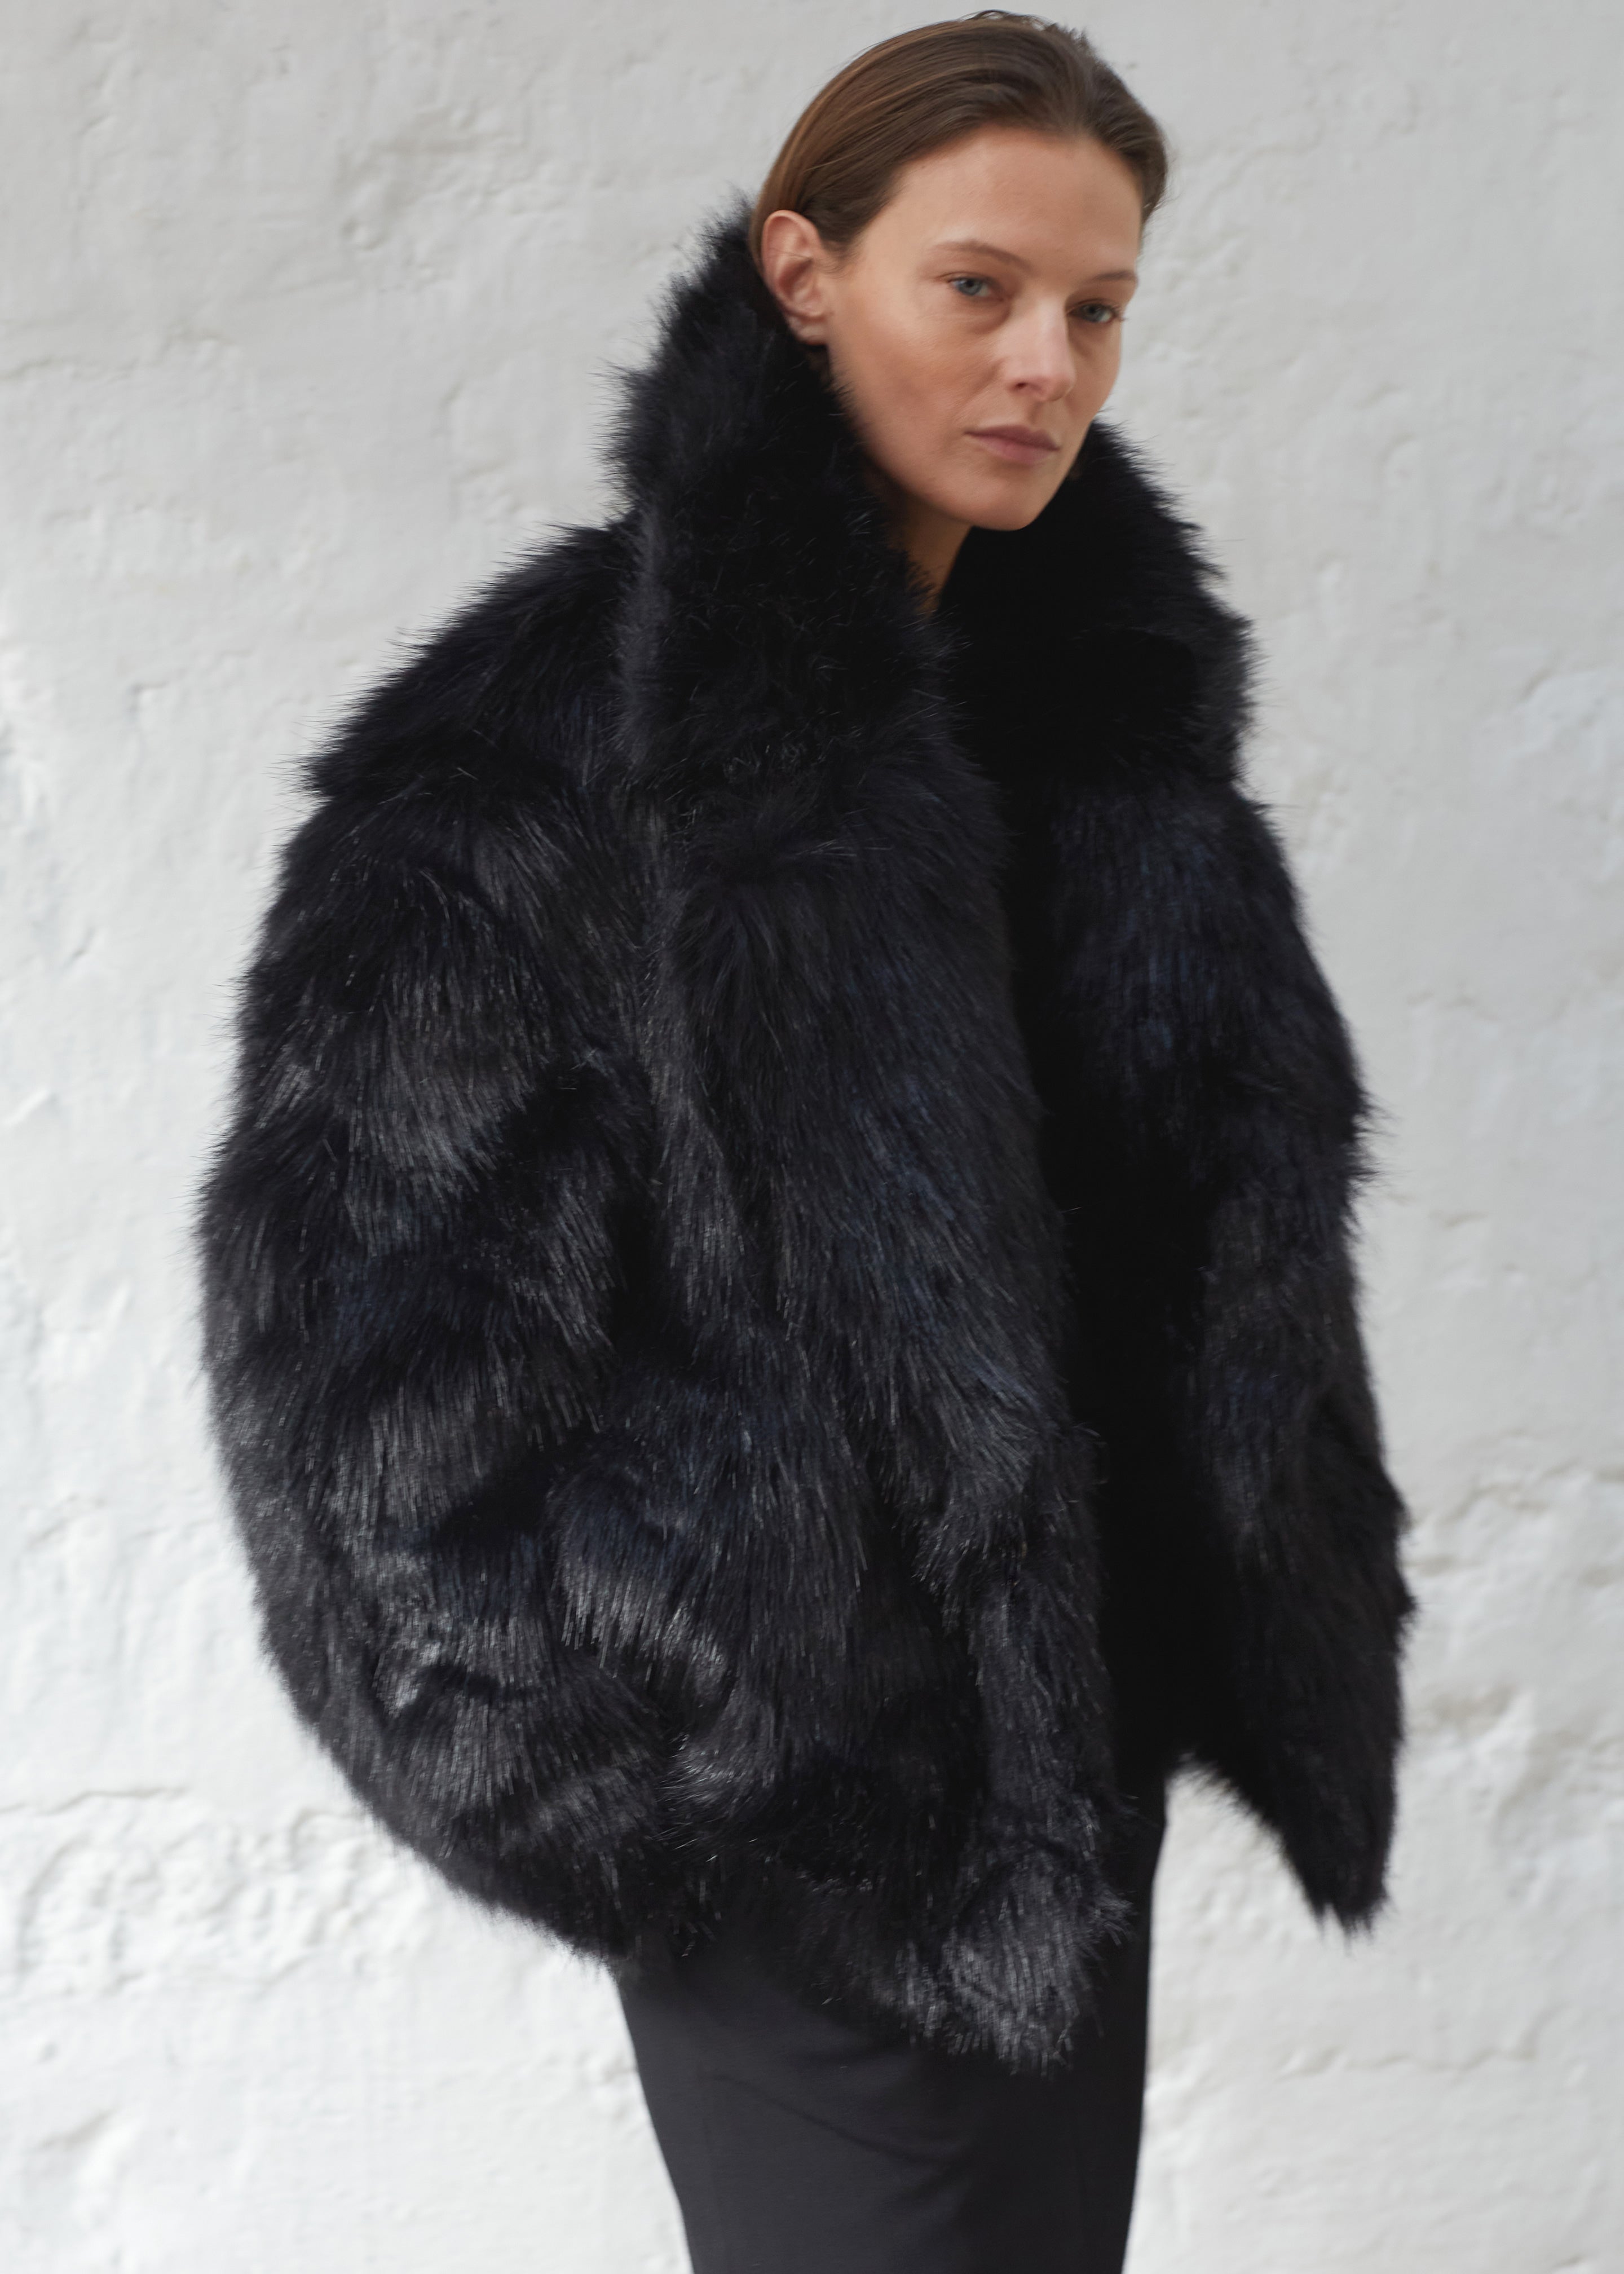 Fallon Short Faux Fur Coat - Black - 7